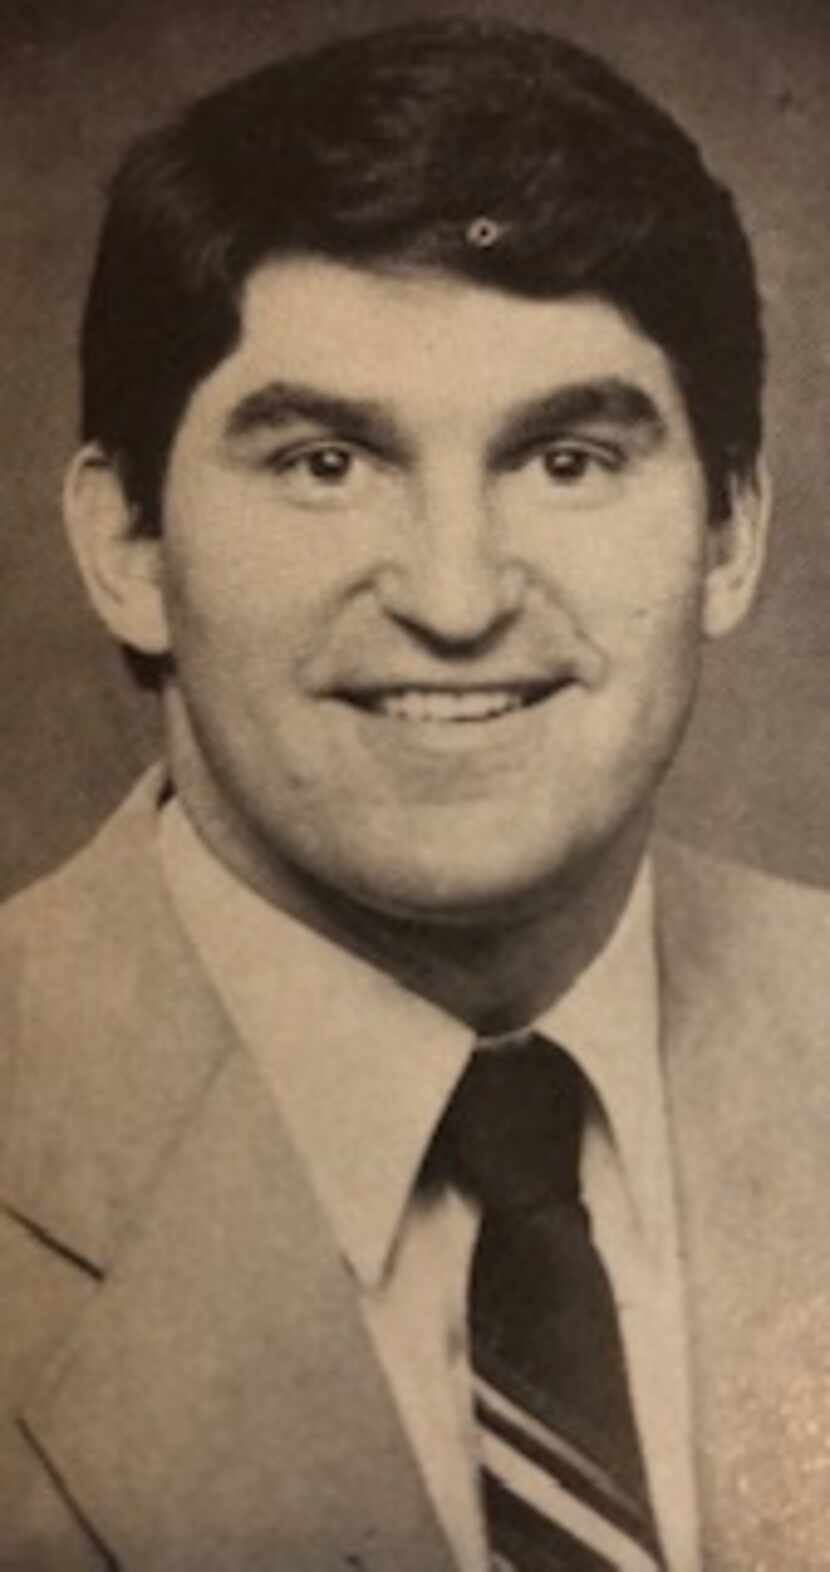 U.S. Sen. Joe Manchin, when he was 35 years old in 1983.